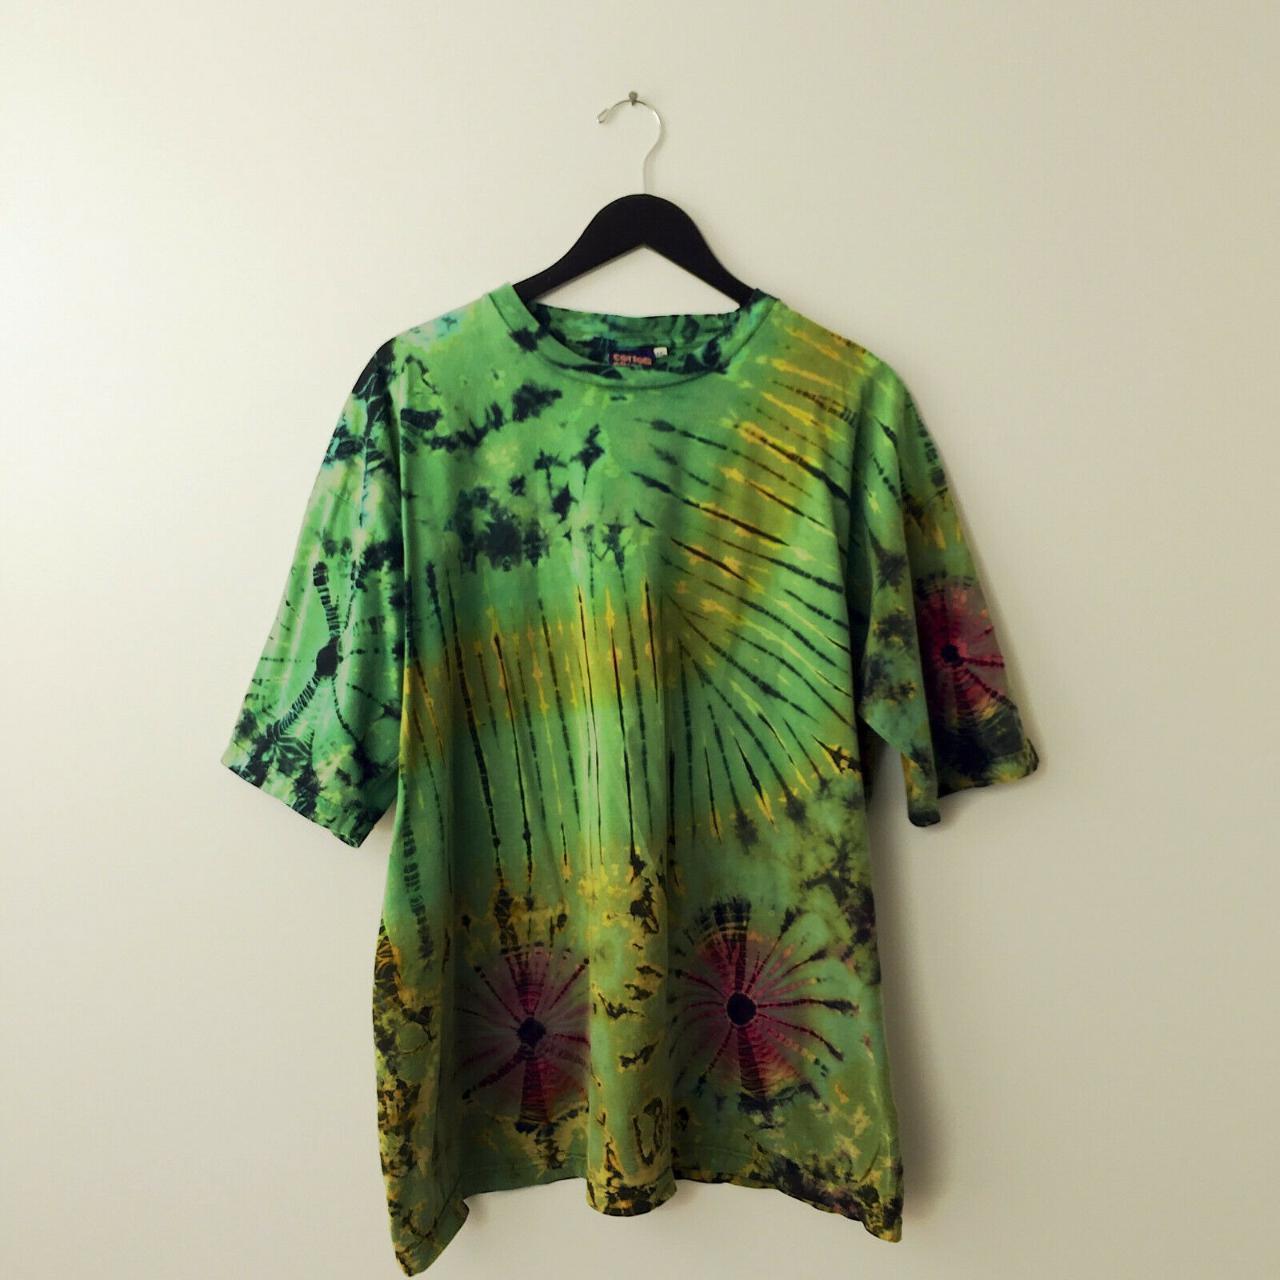 Product Image 1 - Tie Dye Tee Shirt Hippie